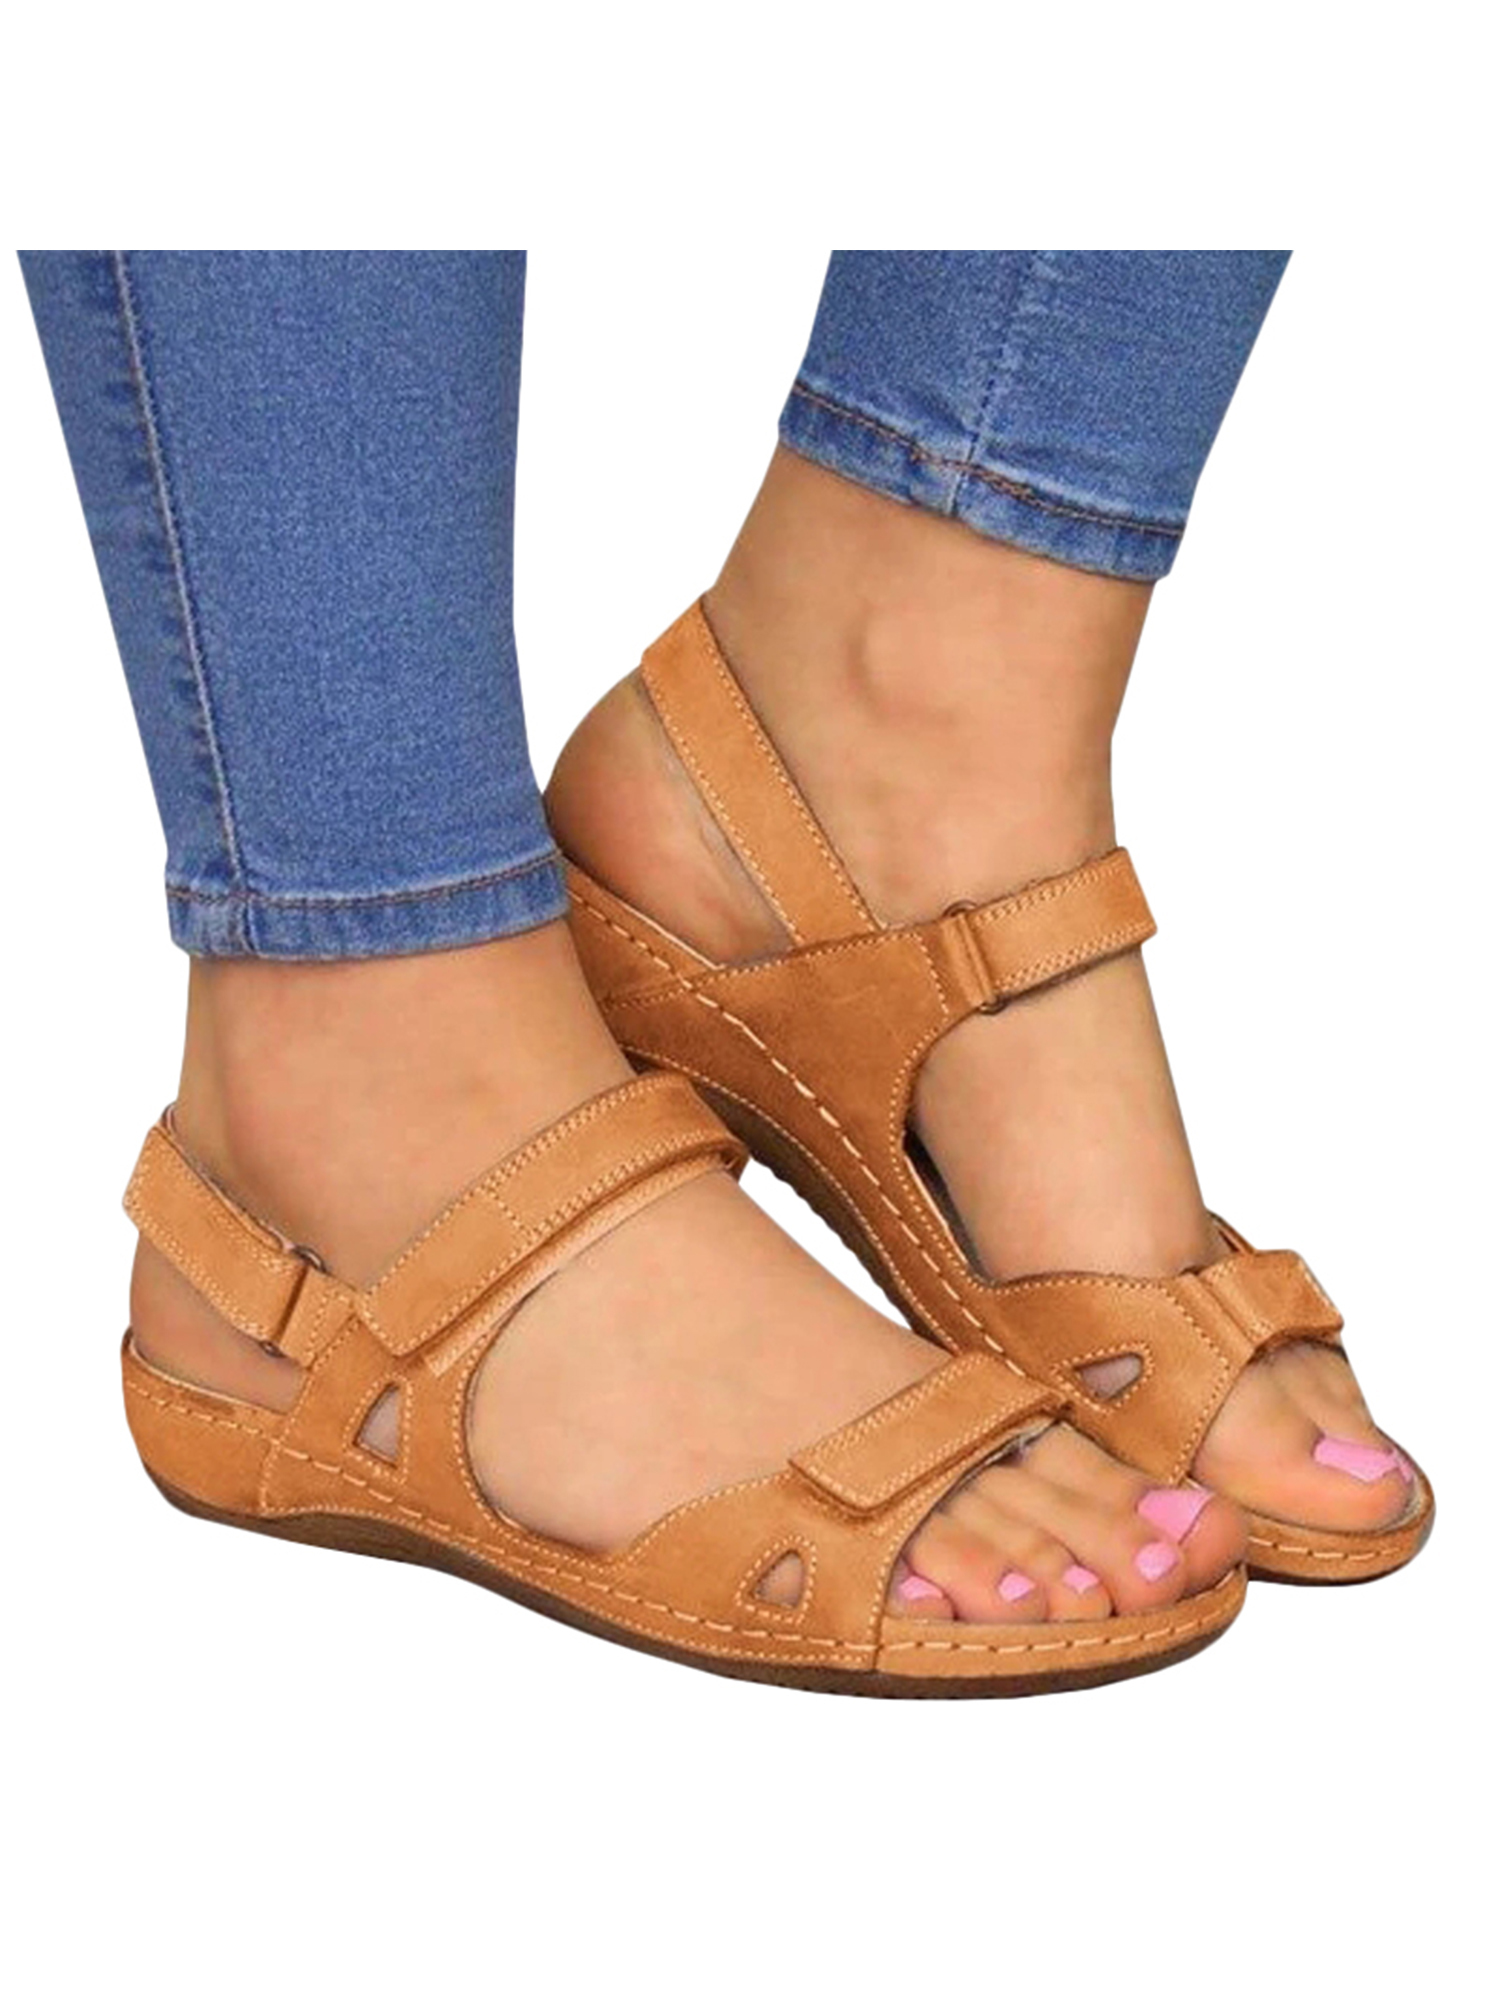 Womens Summer Boho Flip Flops Sandal Cross T Strap Thong Flat Casual Shoes Size - image 1 of 3